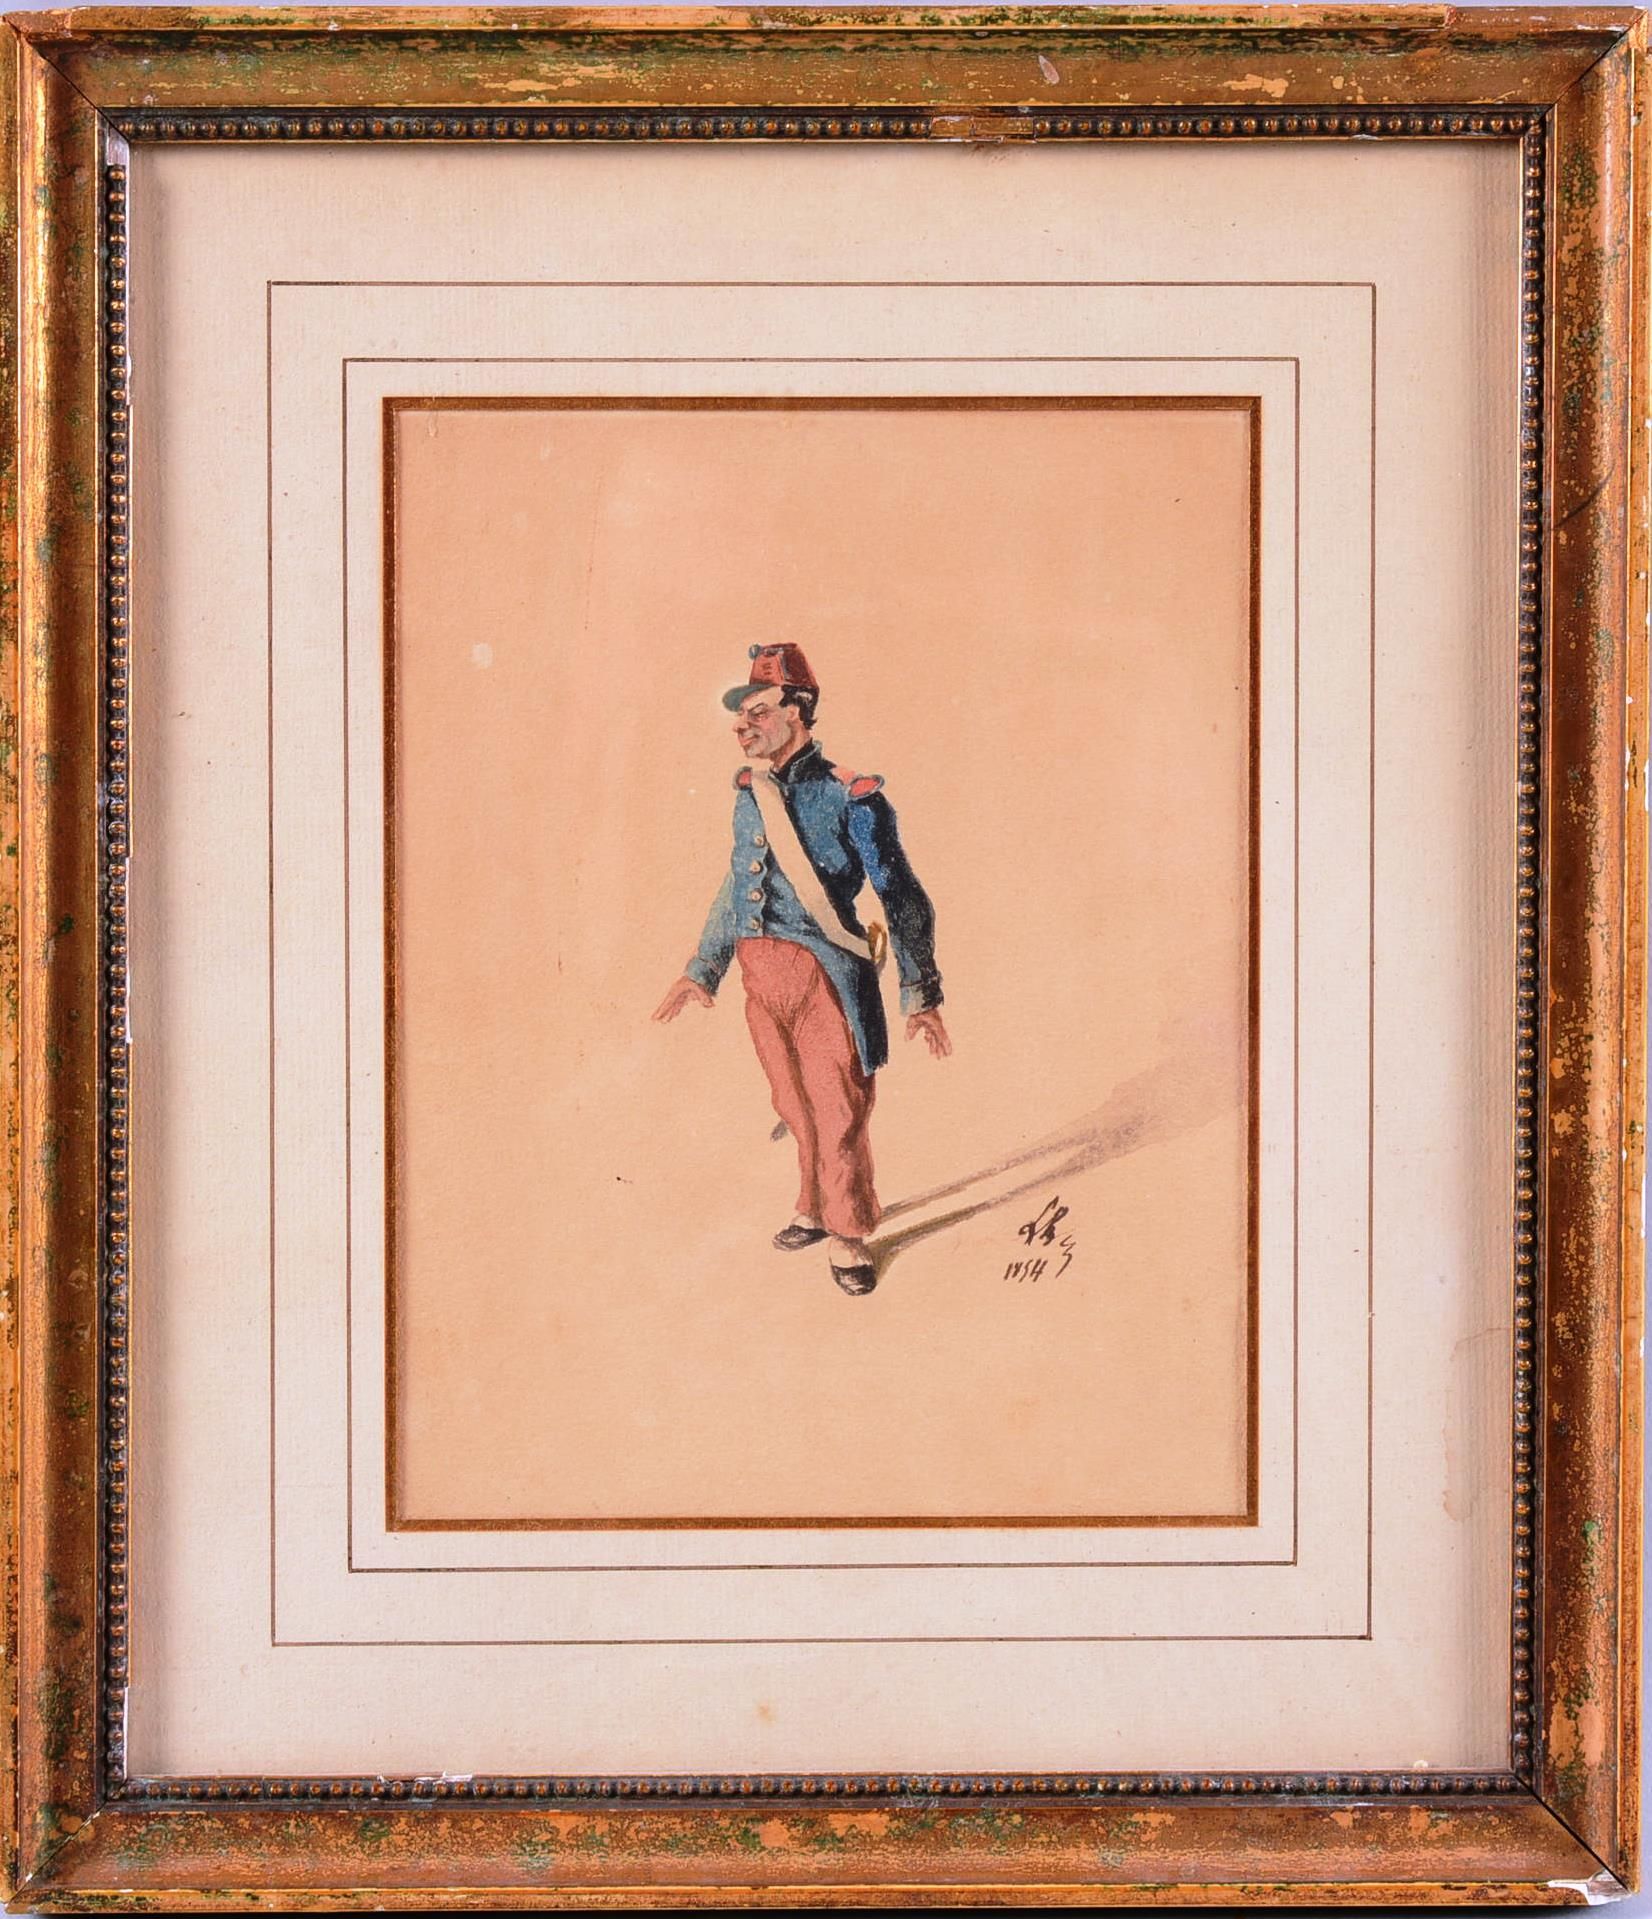 Dessin d'un militaire 一个士兵的彩色图画，右下角有签名和日期，1854年

尺寸：17,50 x 13,50 cm